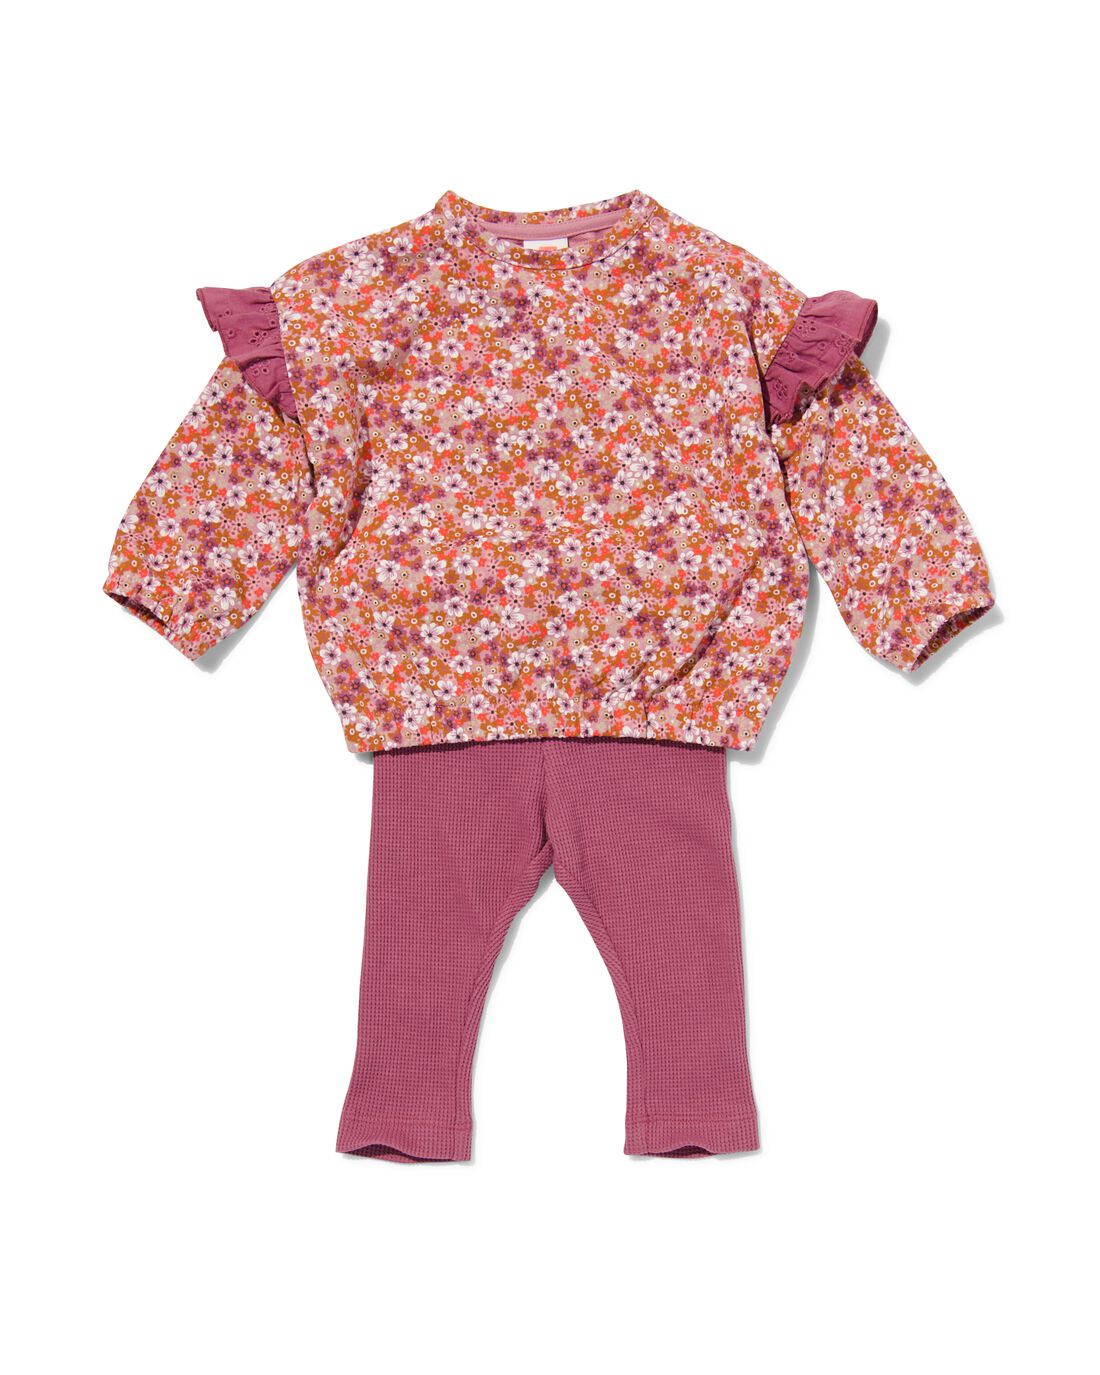 HEMA Kledingset Baby Legging En Sweater Roze (roze)